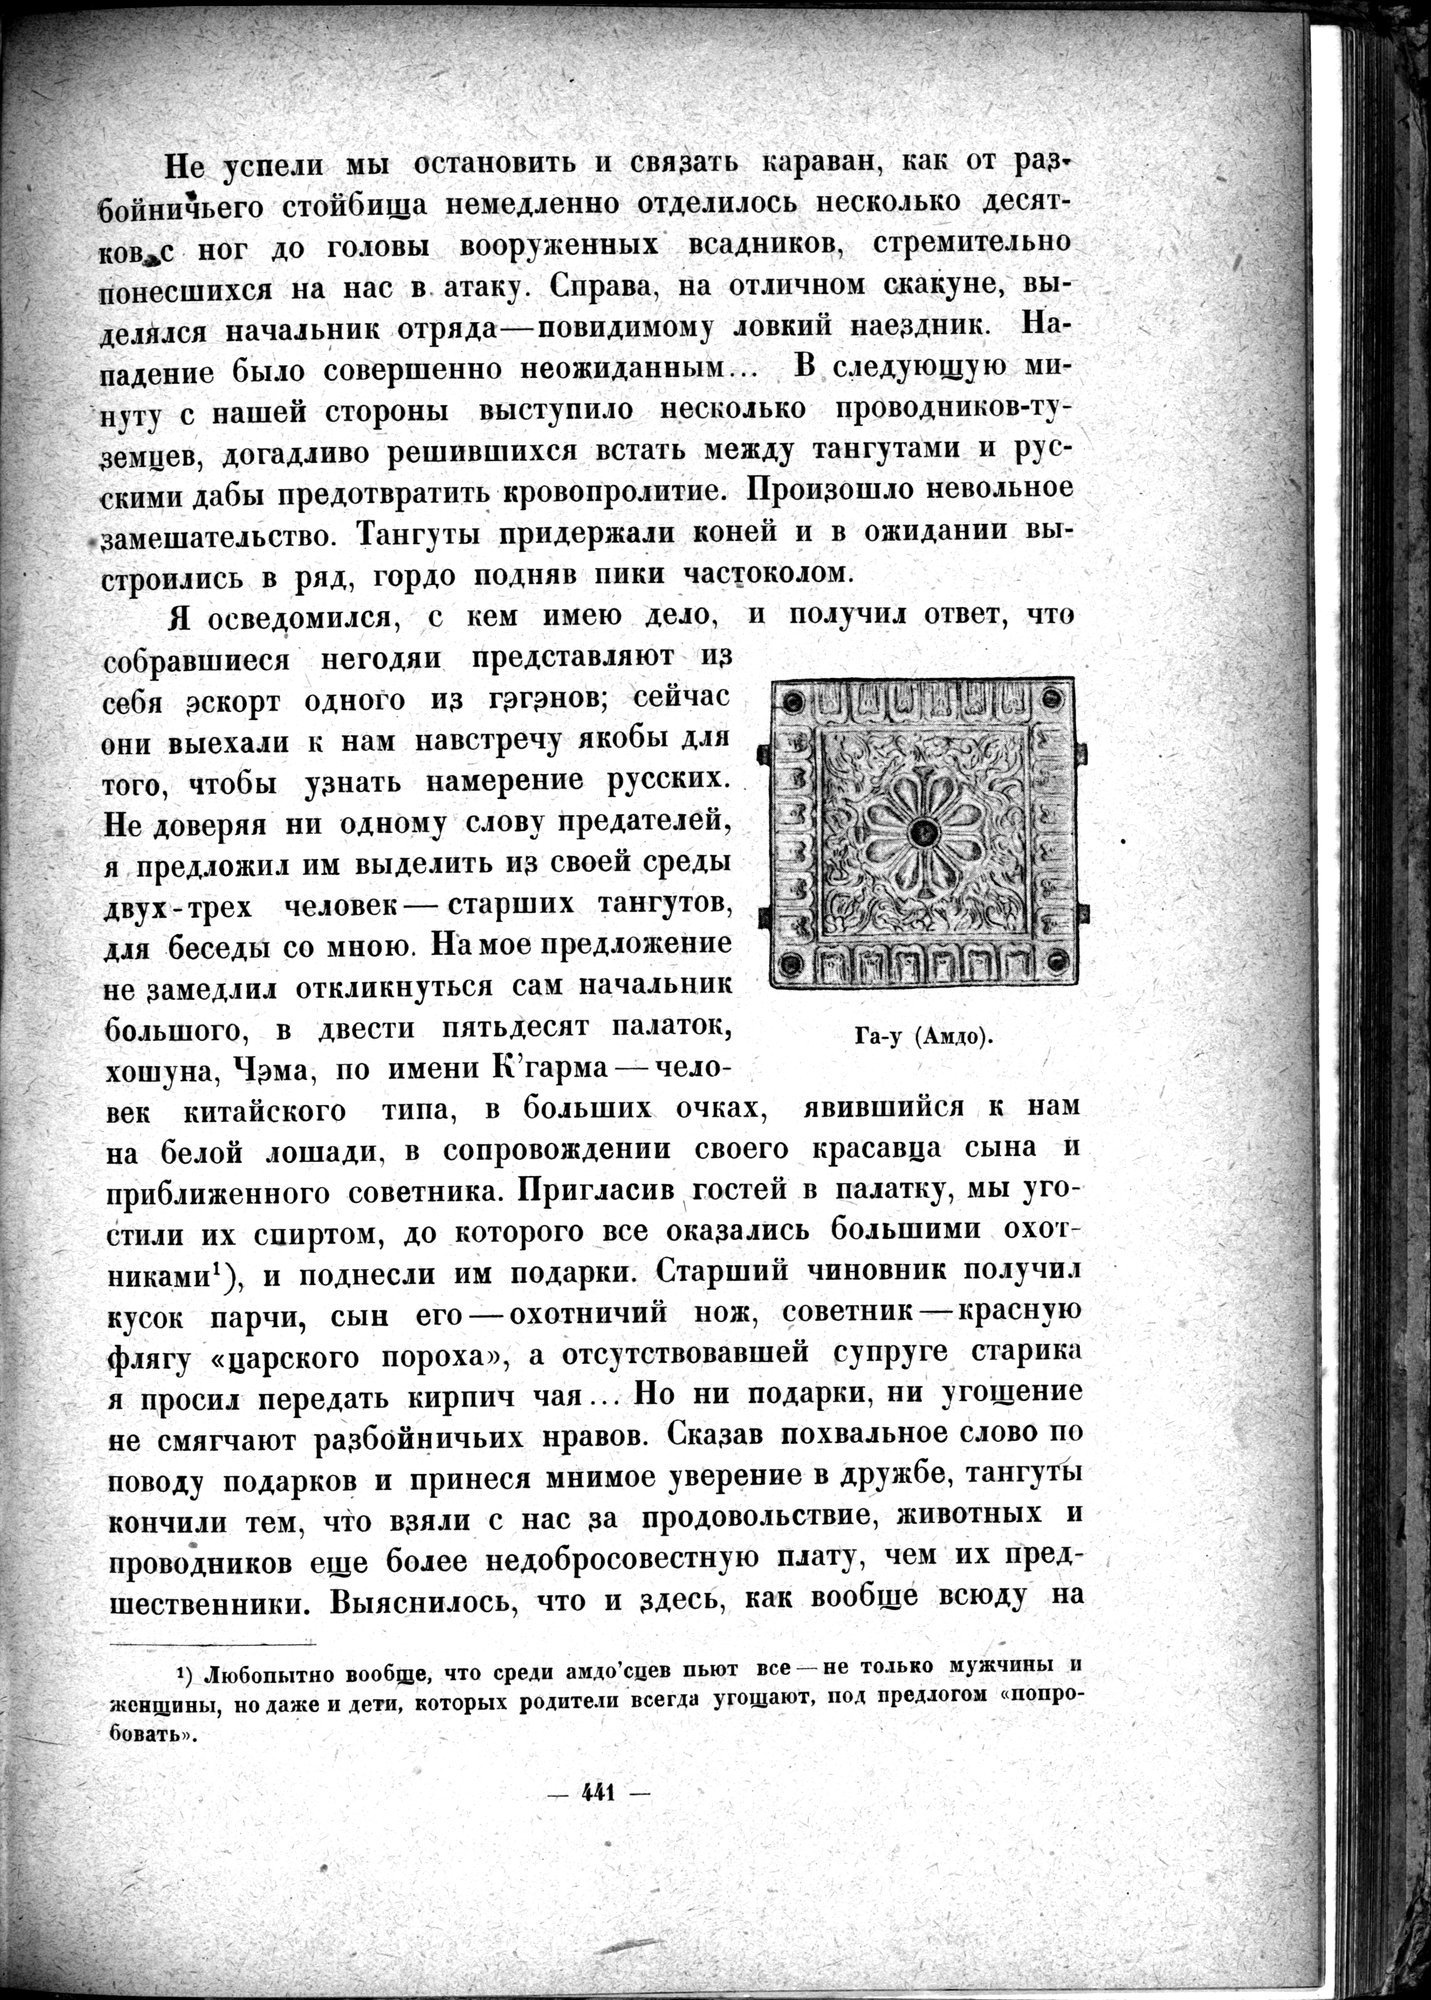 Mongoliya i Amdo i mertby gorod Khara-Khoto : vol.1 / Page 503 (Grayscale High Resolution Image)